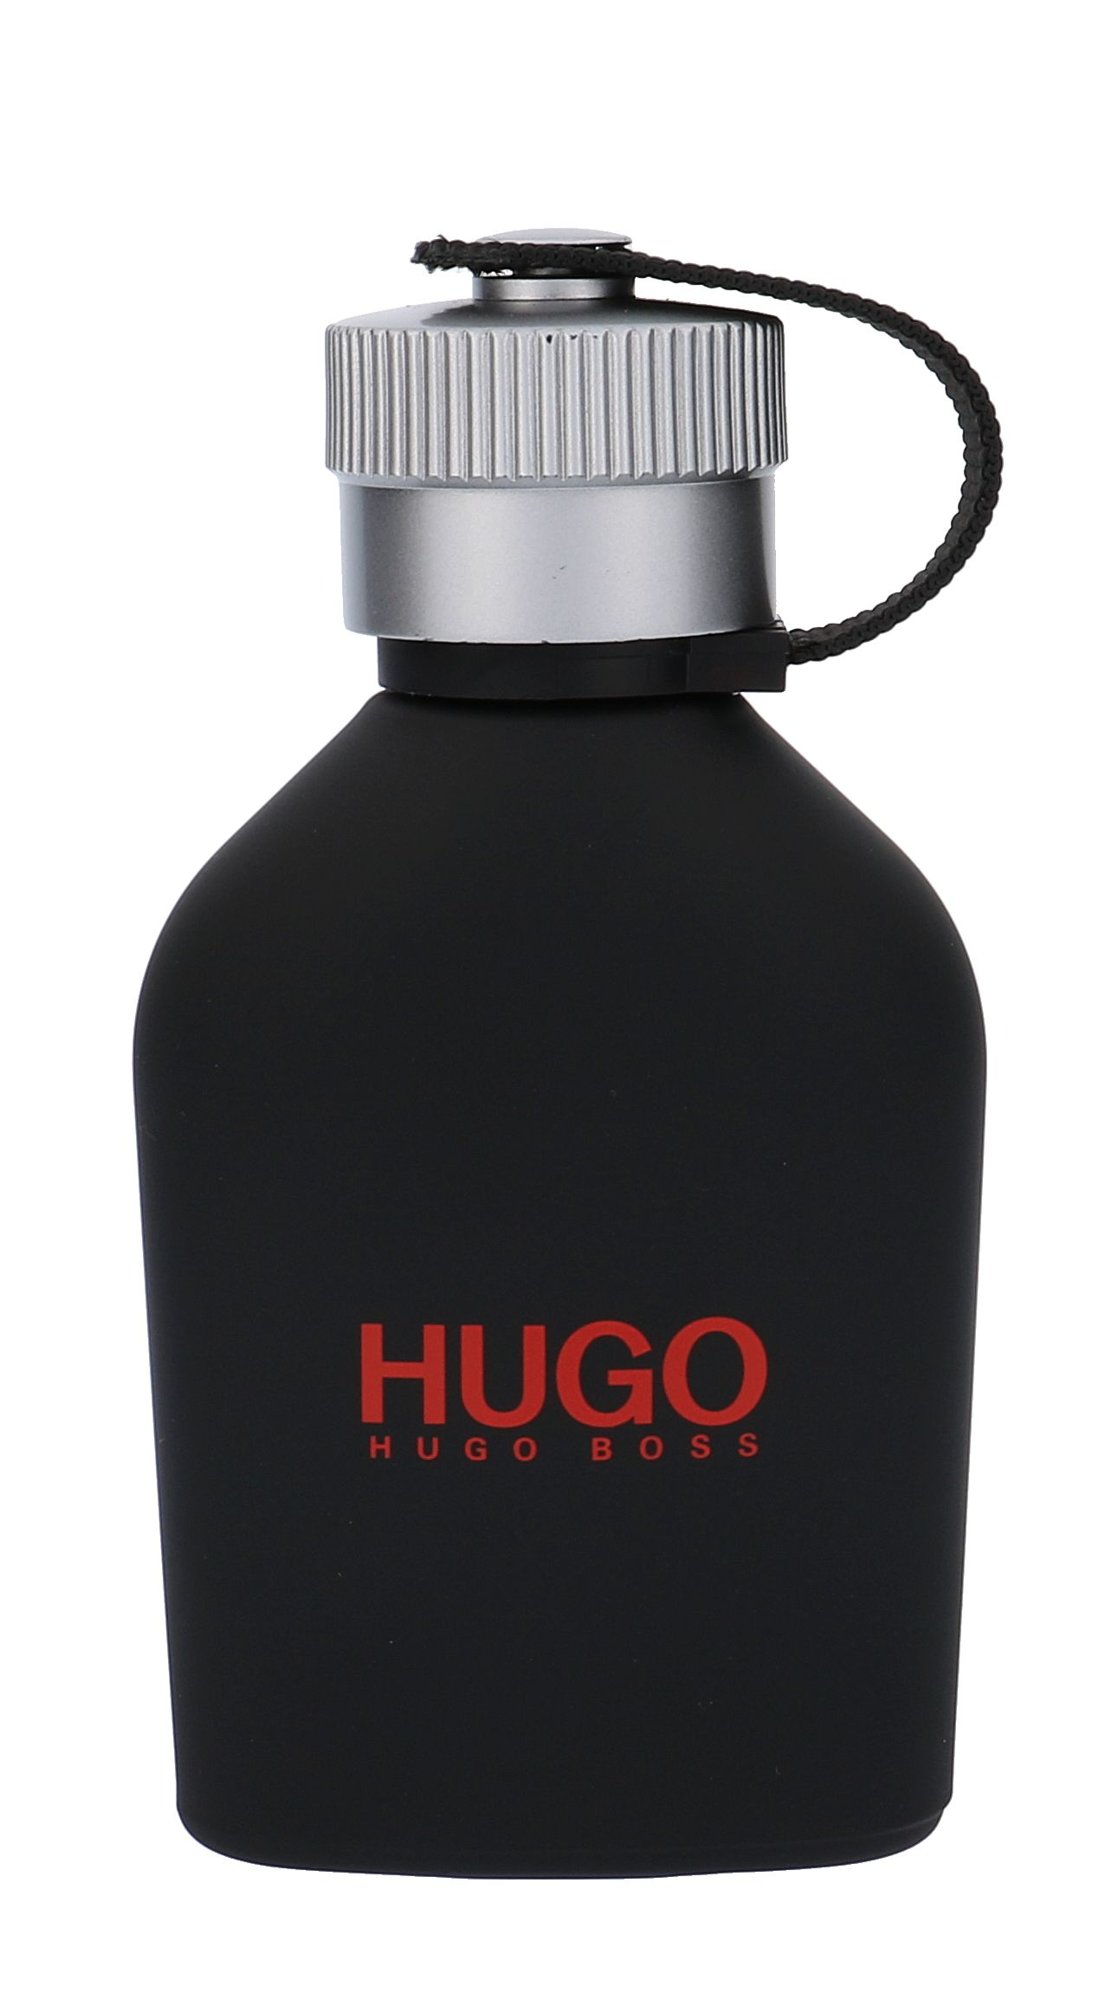 Hugo Boss Hugo Just Different 75ml Kvepalai Vyrams EDT